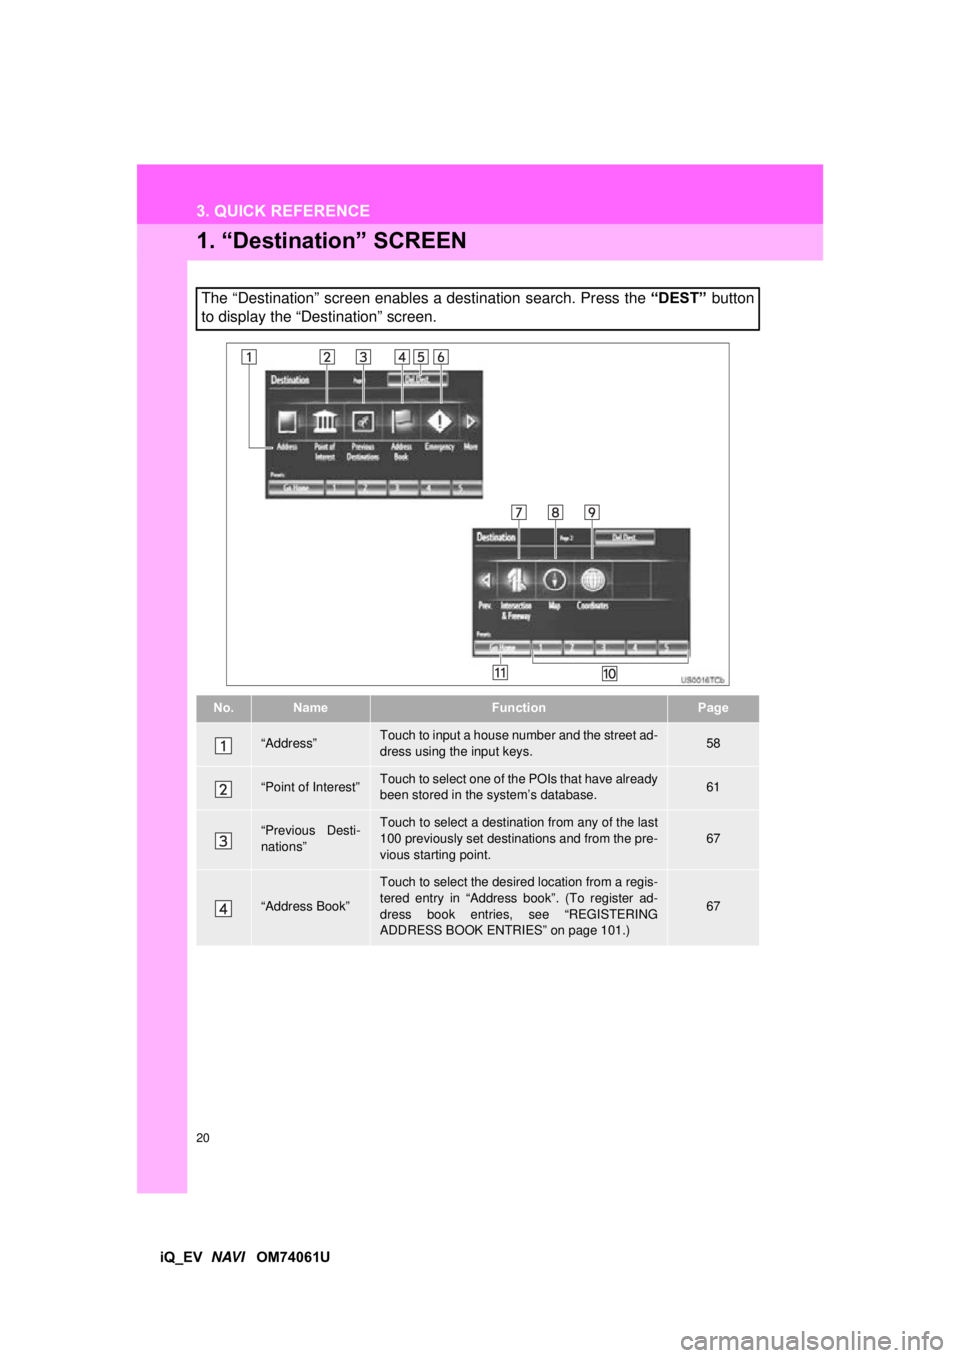 TOYOTA iQ EV 2013  Accessories, Audio & Navigation (in English) 20
iQ_EV  NAVI   OM74061U
3. QUICK REFERENCE
1. “Destination” SCREEN
The “Destination” screen enables a destination search. Press the  “DEST” button
to display the “Destination” screen